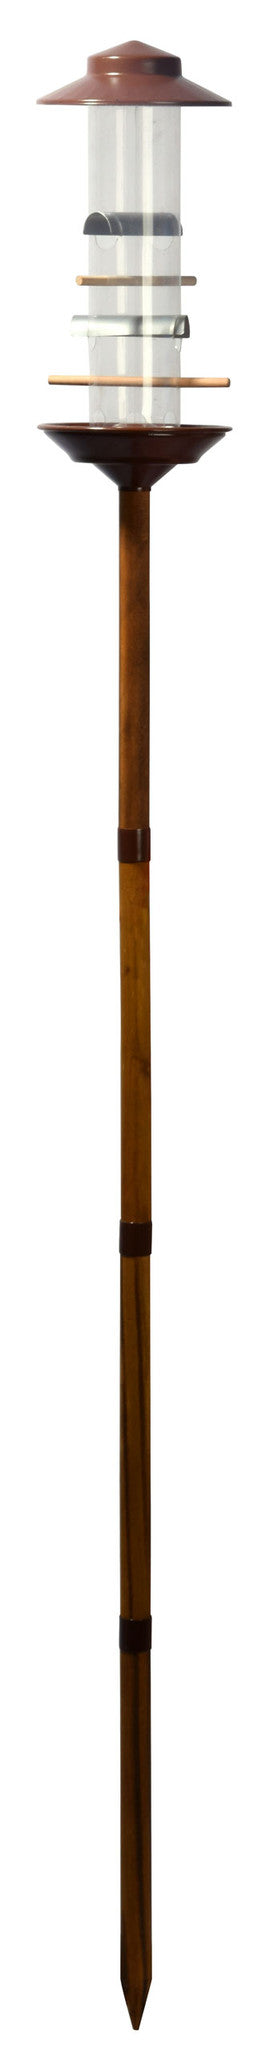 Art. 28810 - Große Futtersäule inkl. Holz-Ständer | Bronze-Design